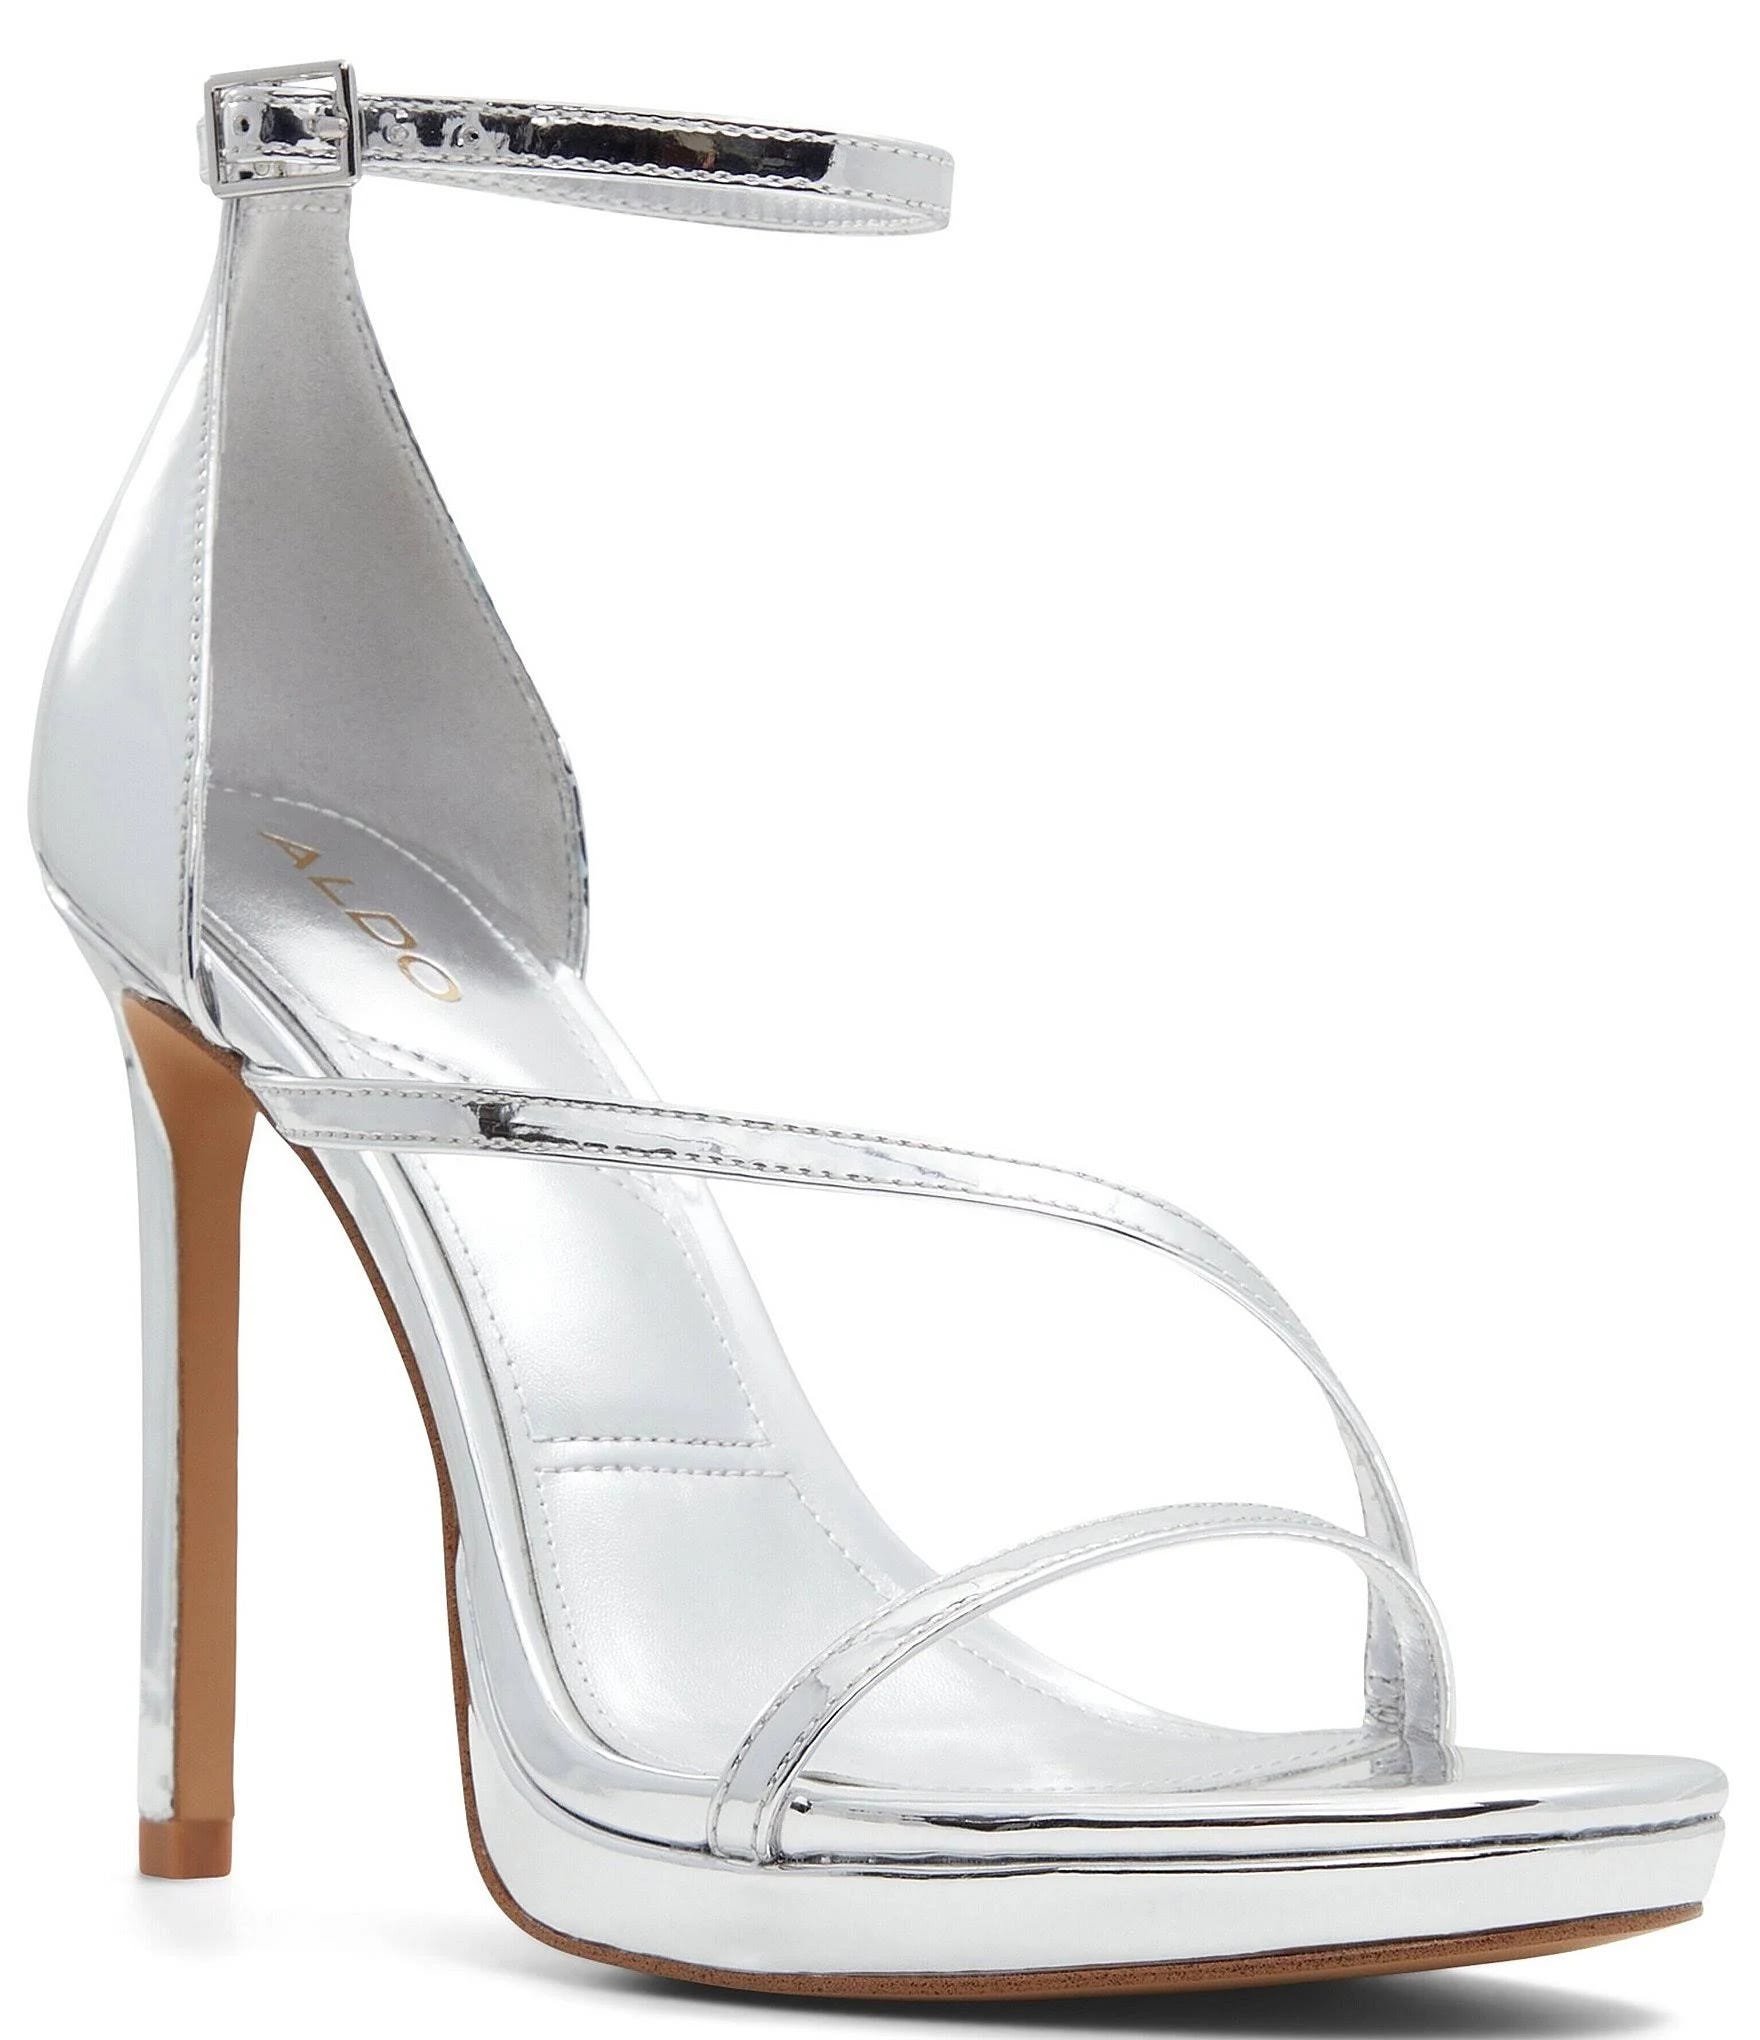 Stylish Silver Platform Heel Dress Sandals by ALDO | Image